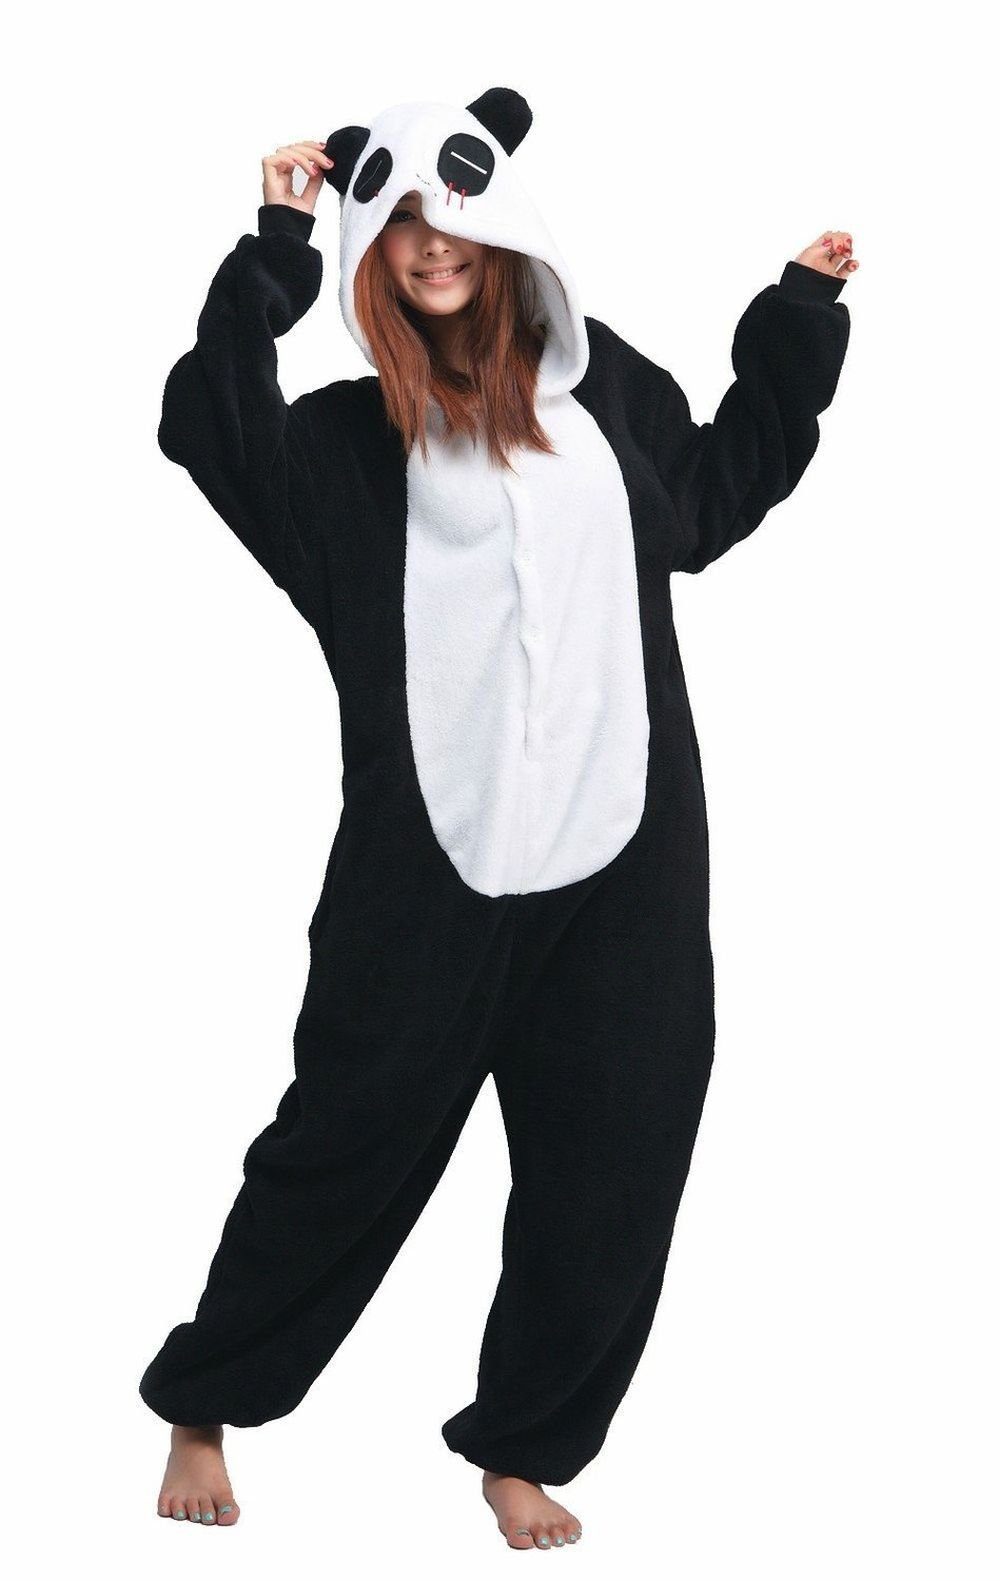 Katara Partyanzug Zoo Wilde Tiere Jumpsuit Kostüm Erwachsene S-XL, Karneval - Kostüm, Kigurumi - Panda schwarz-weiß XL (175-185cm)